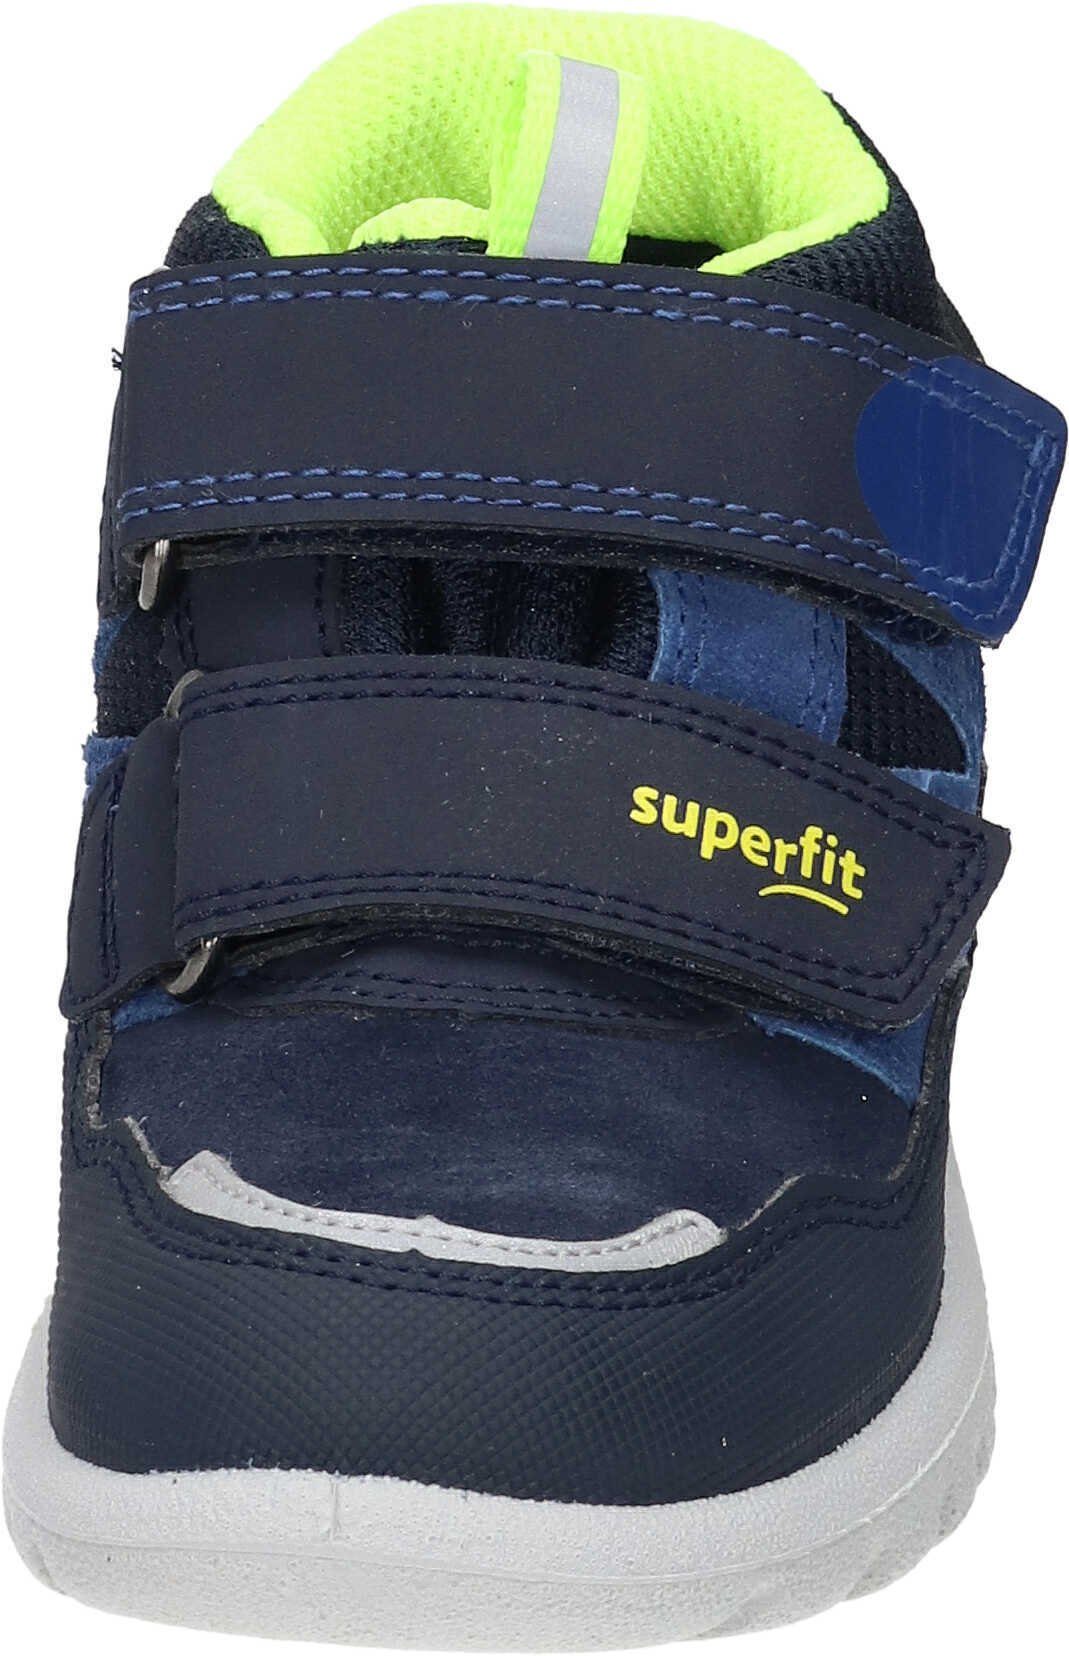 blau Synthetik Stiefel strapazierfähigem Superfit aus Stiefel